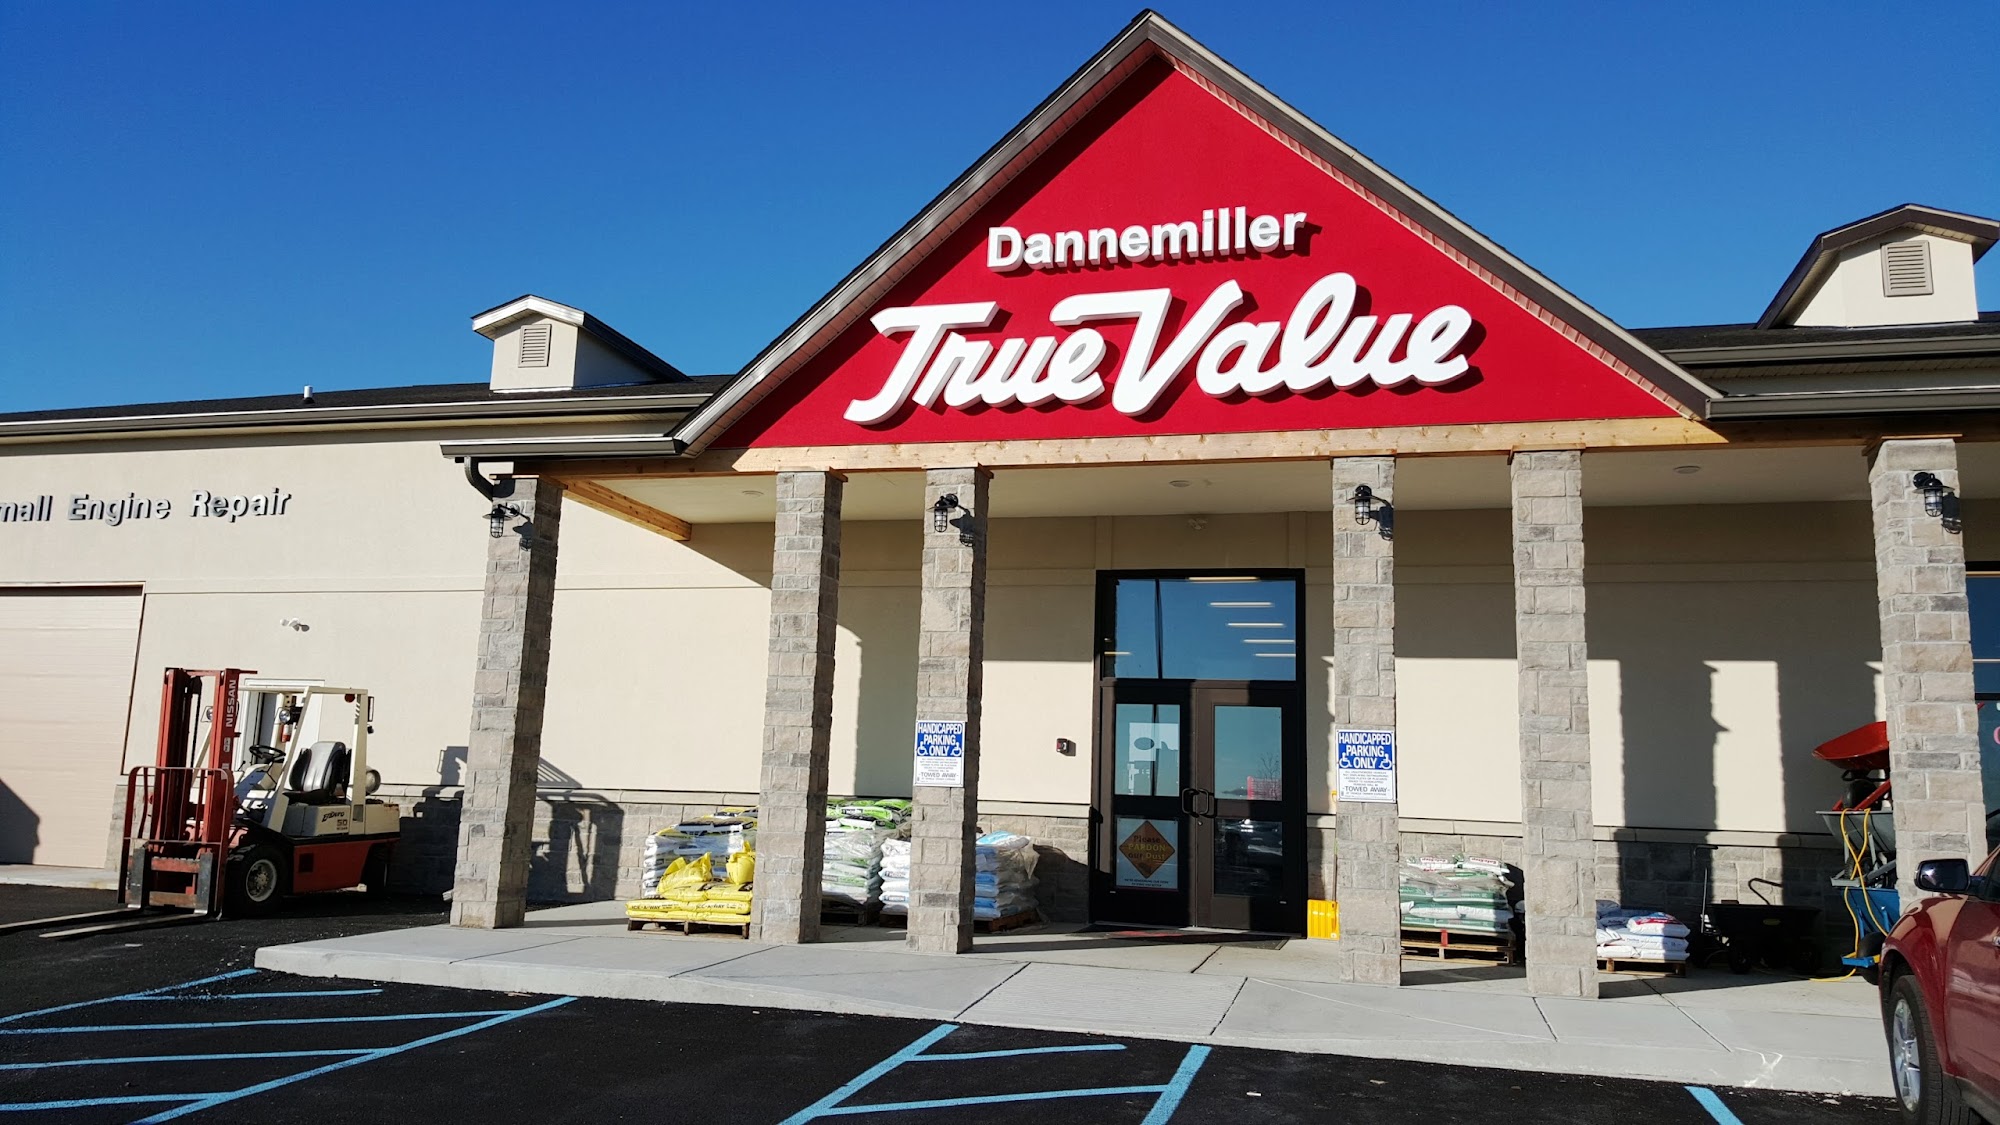 Dannemiller True Value Hardware & Service Center